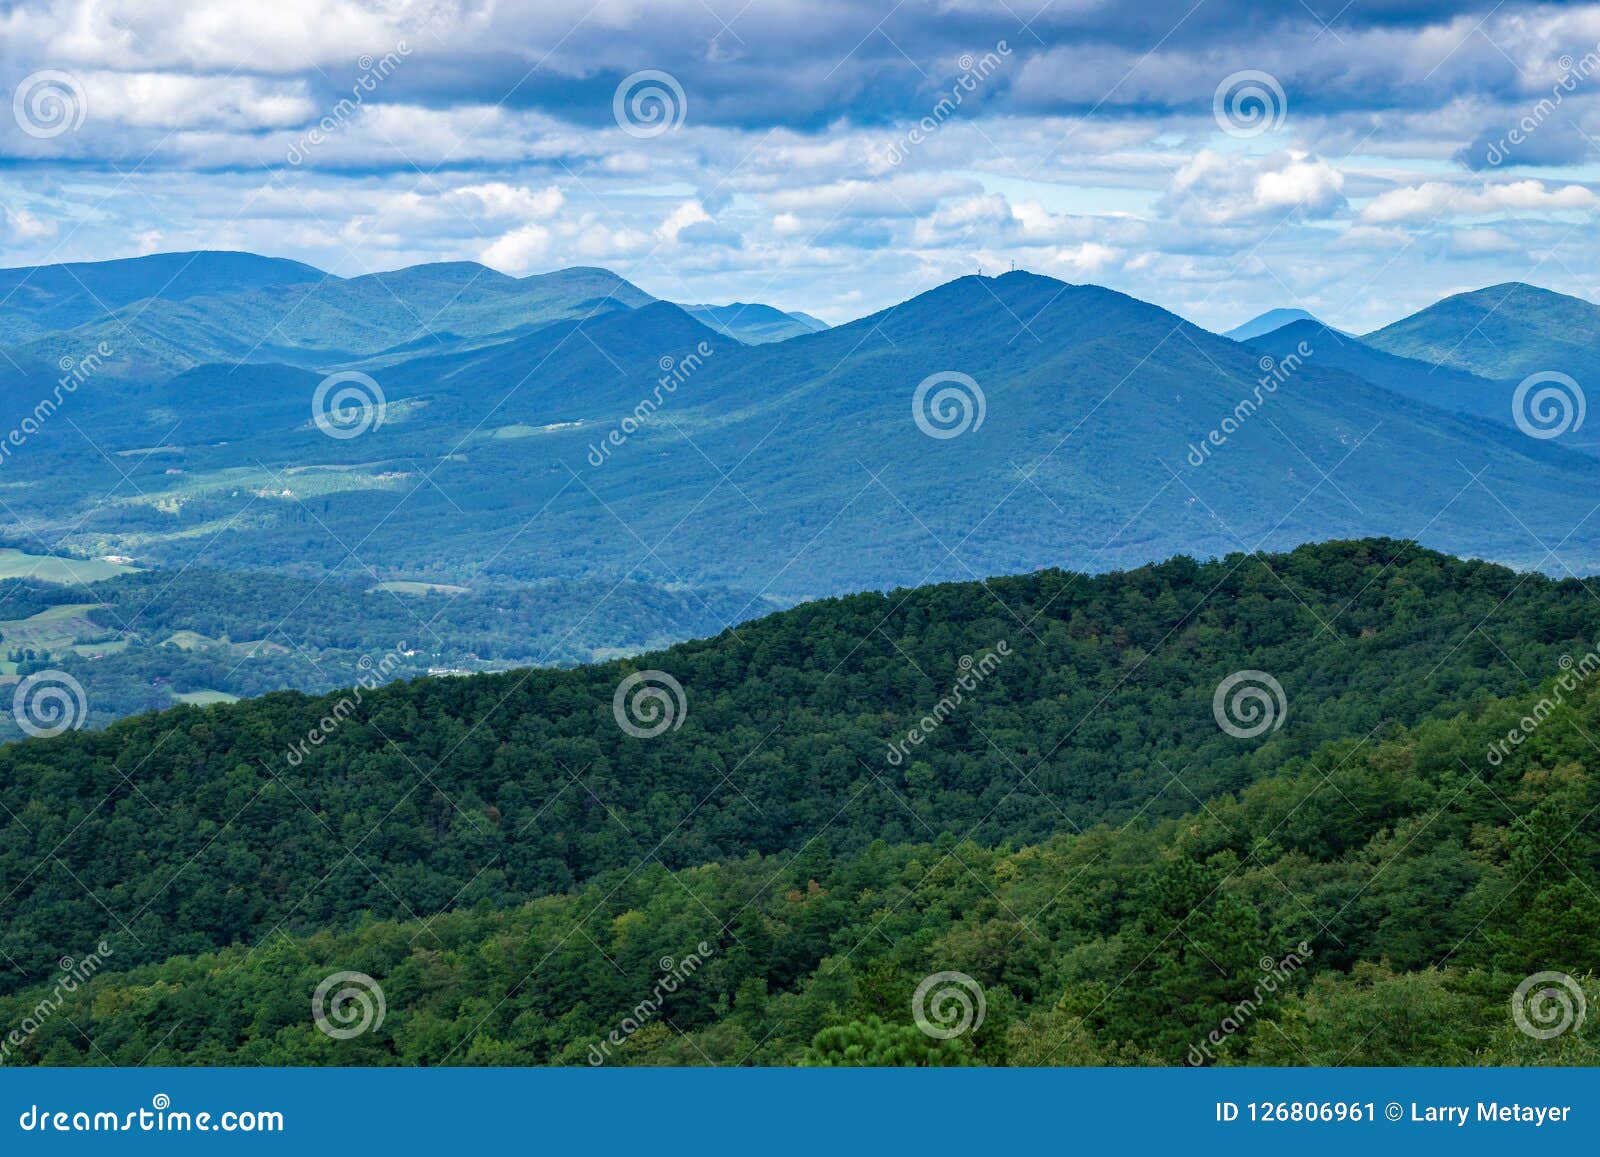 beautiful blue ridge mountains on a cloudy day